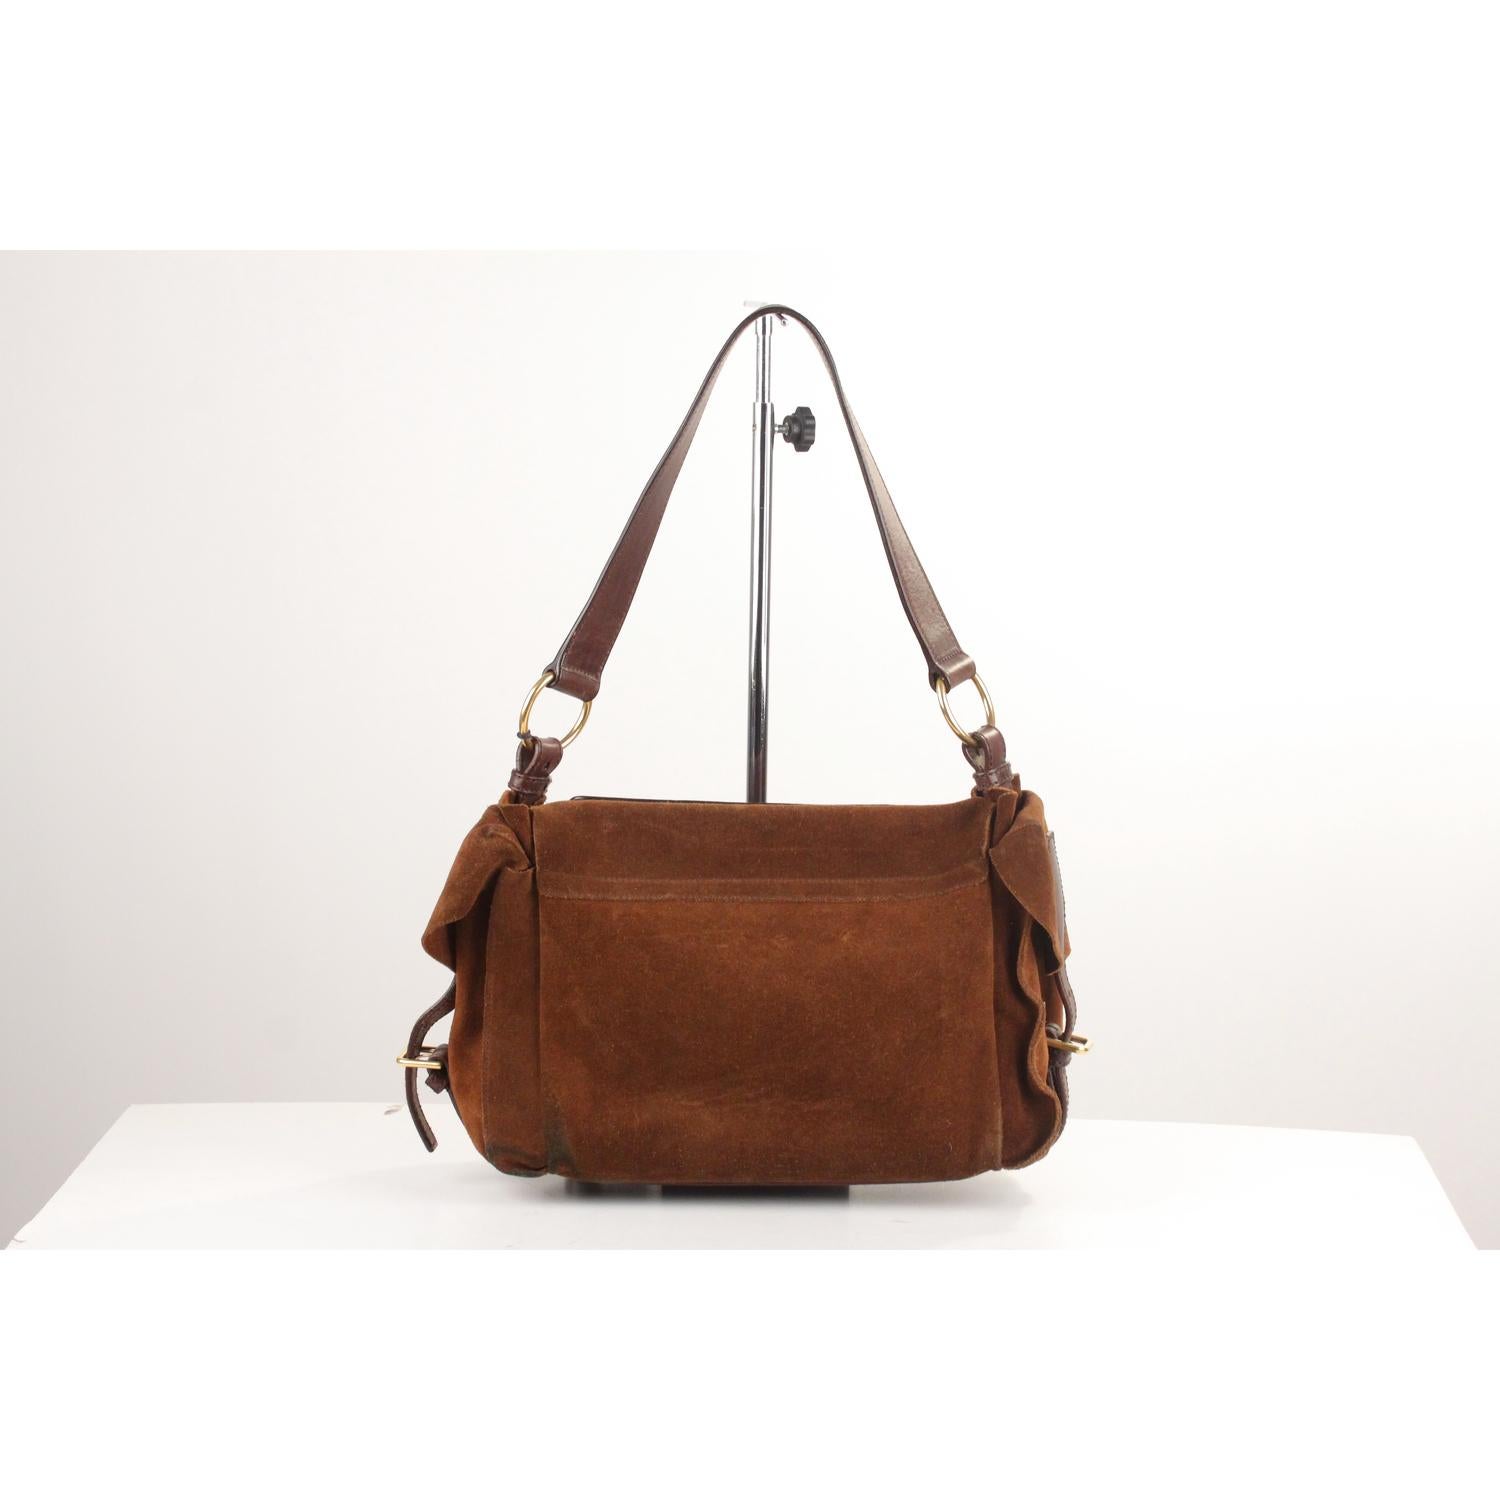 Yves Saint Laurent Brown Suede and Leather Shoulder Bag 1